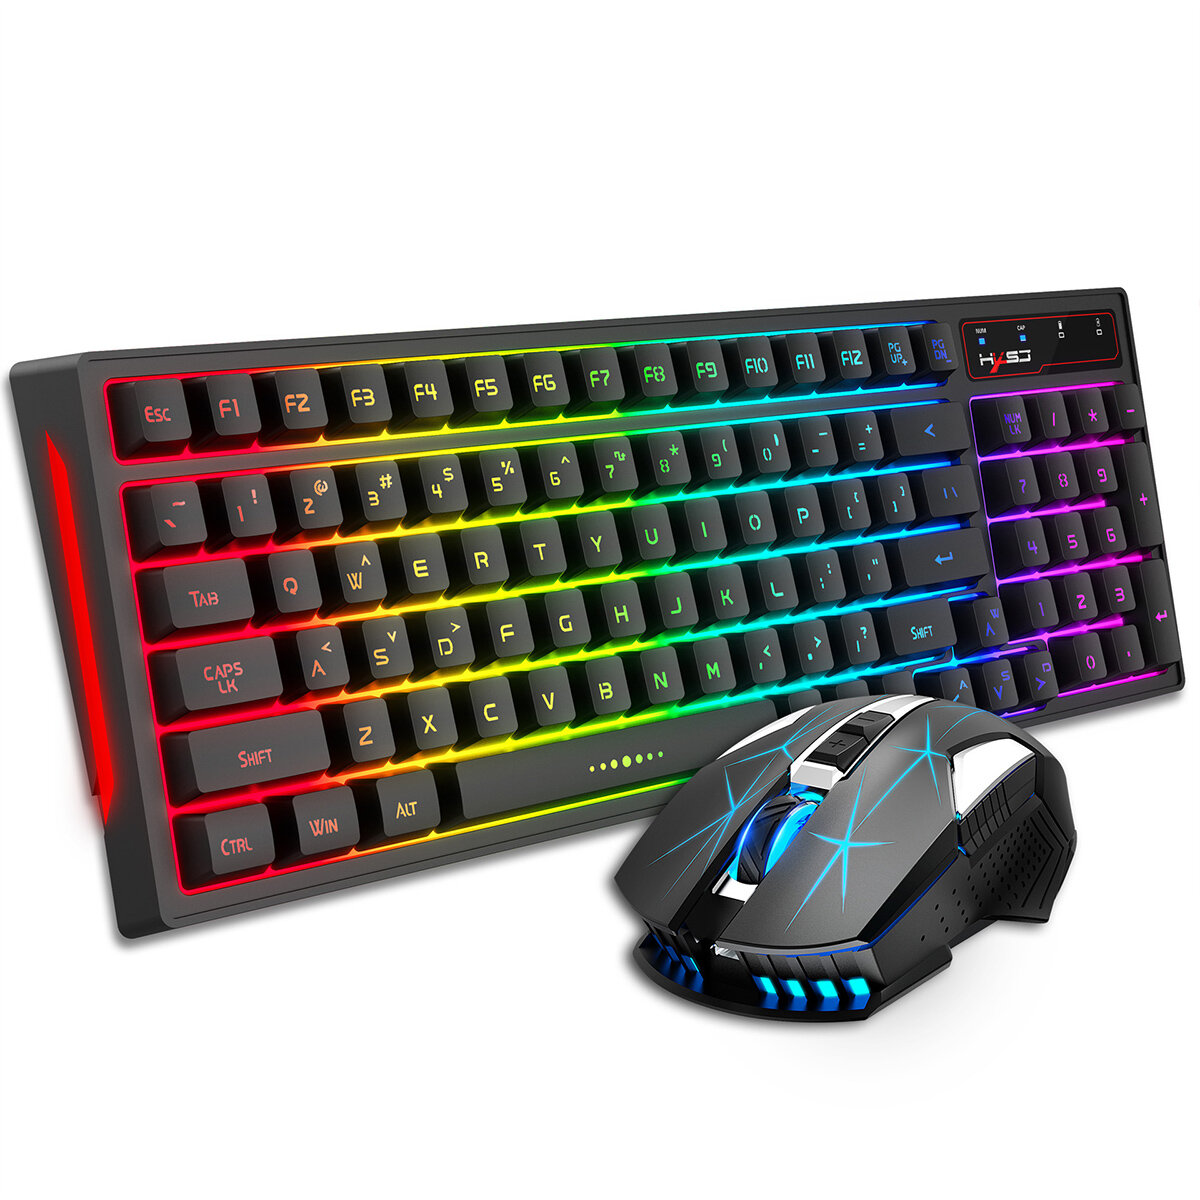 HXSJ L99 2.4G Wireless Keyboard Mouse Combo 96-Keys ABS Translucent Keycaps RGB Backlight Gaming Key